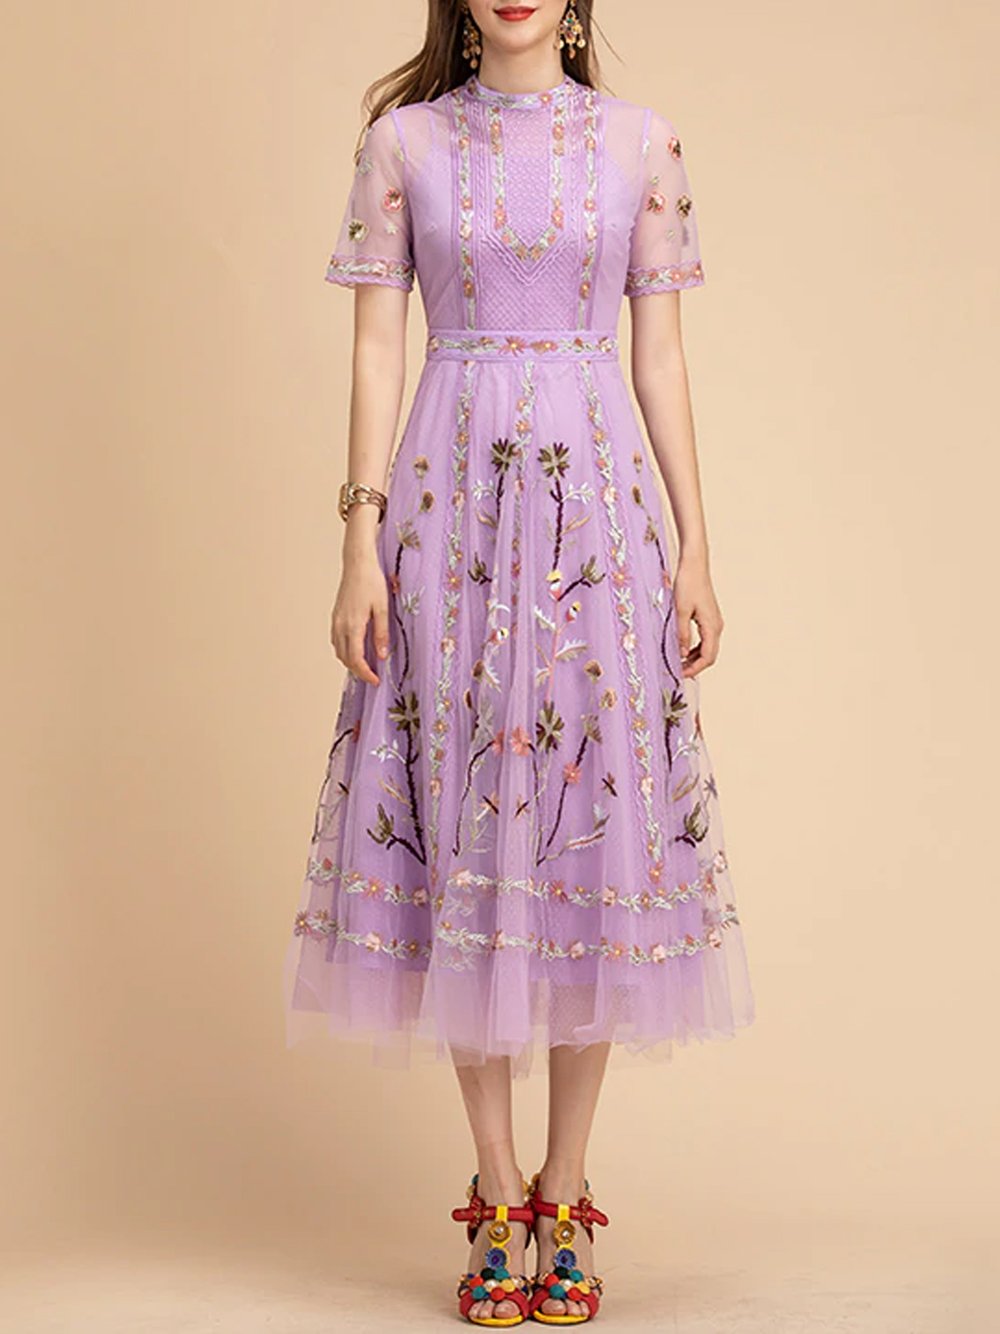 ANDEKA Embroidery Dress